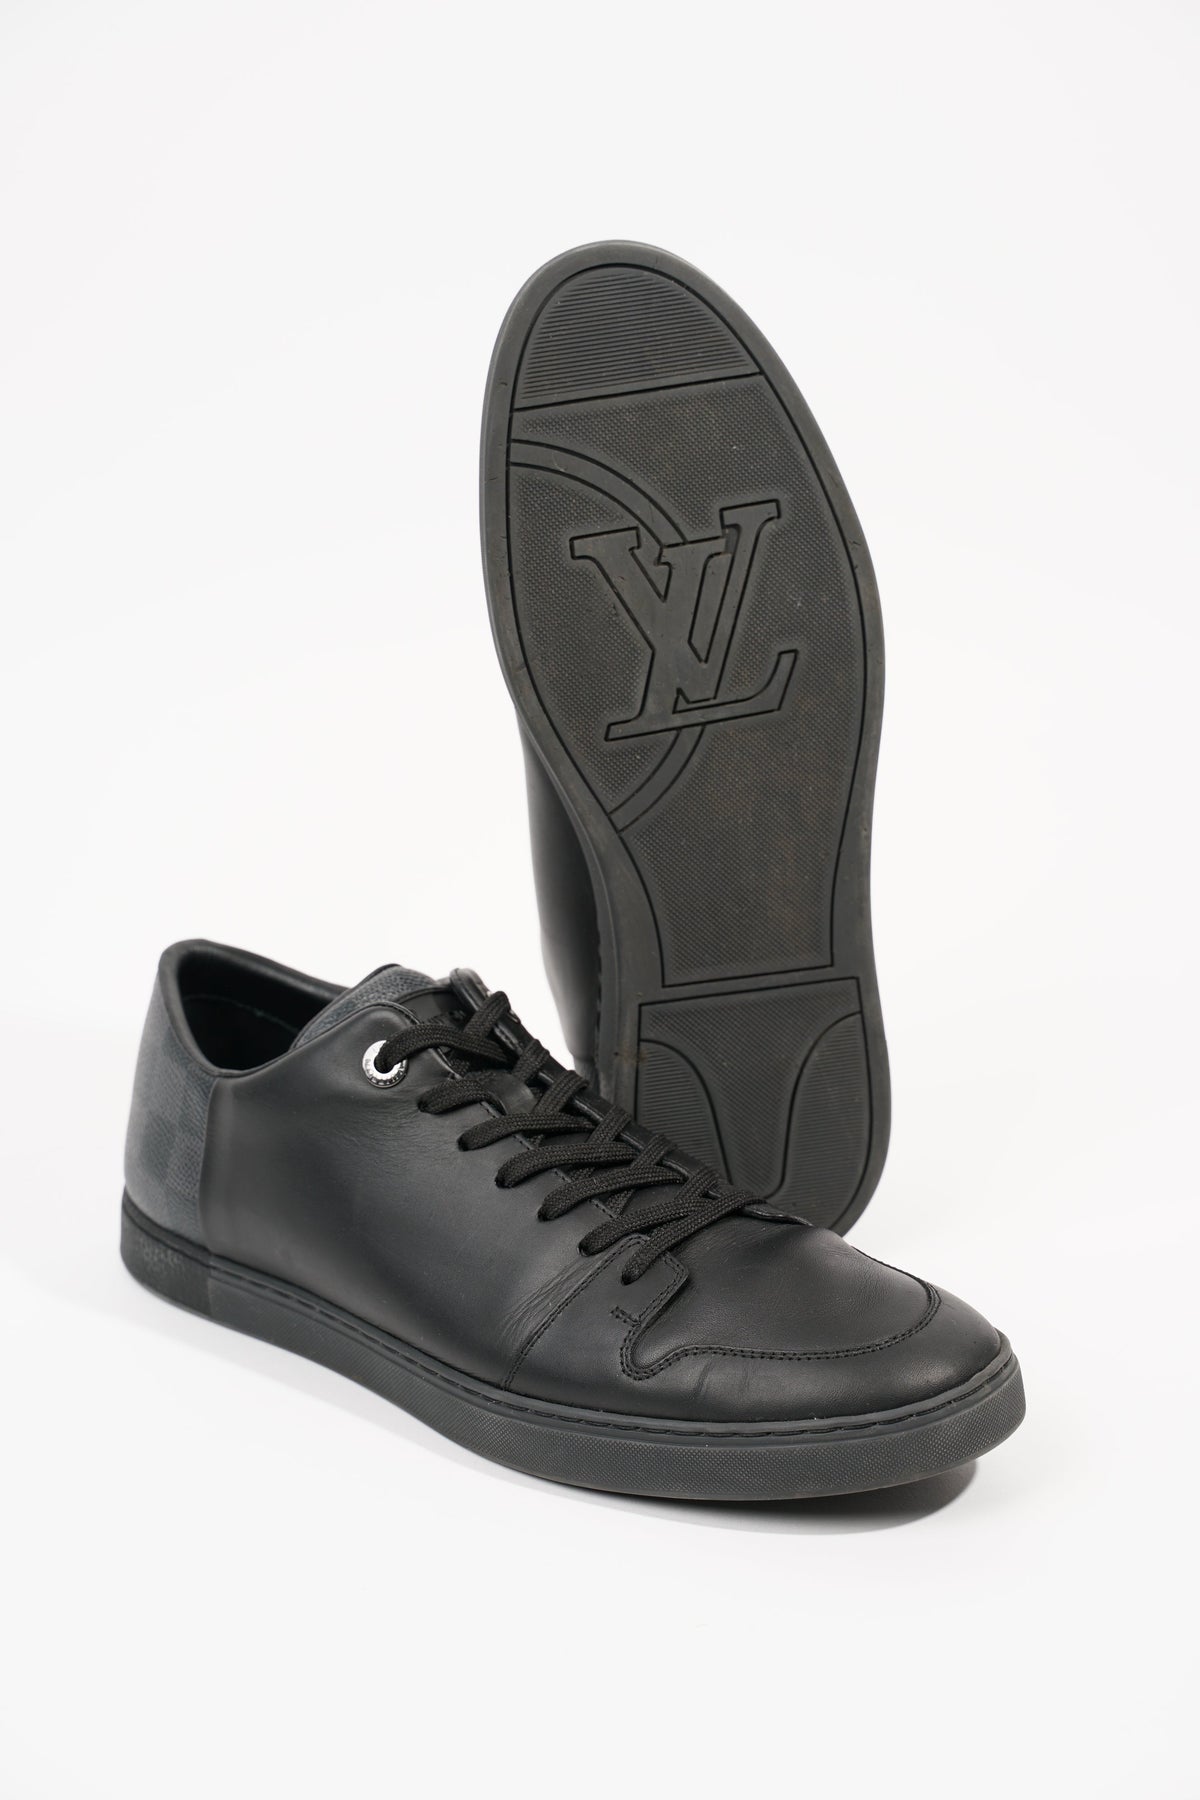 LOUIS VUITTON Men's Black White Damier Graphite Low Top Sneakers